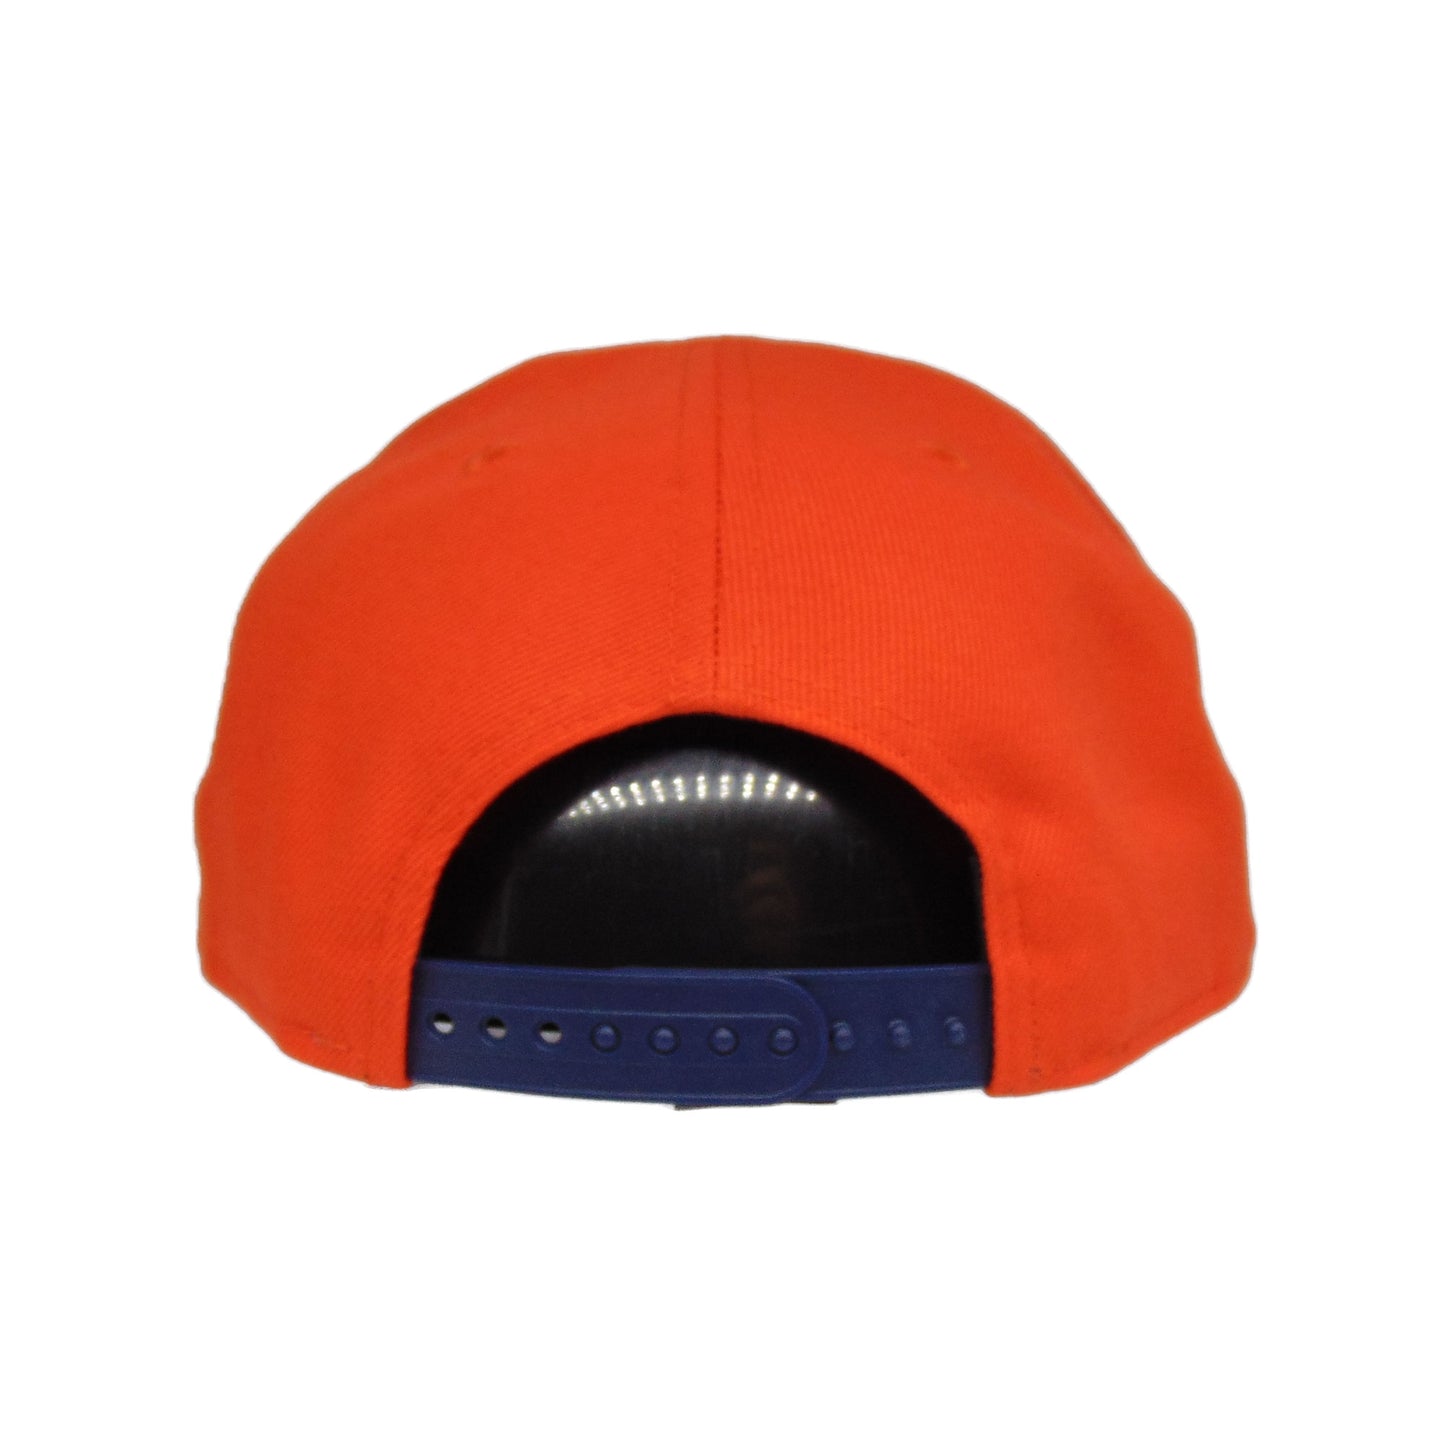 Houston Astros Custom New Era Snapback Cap Orange